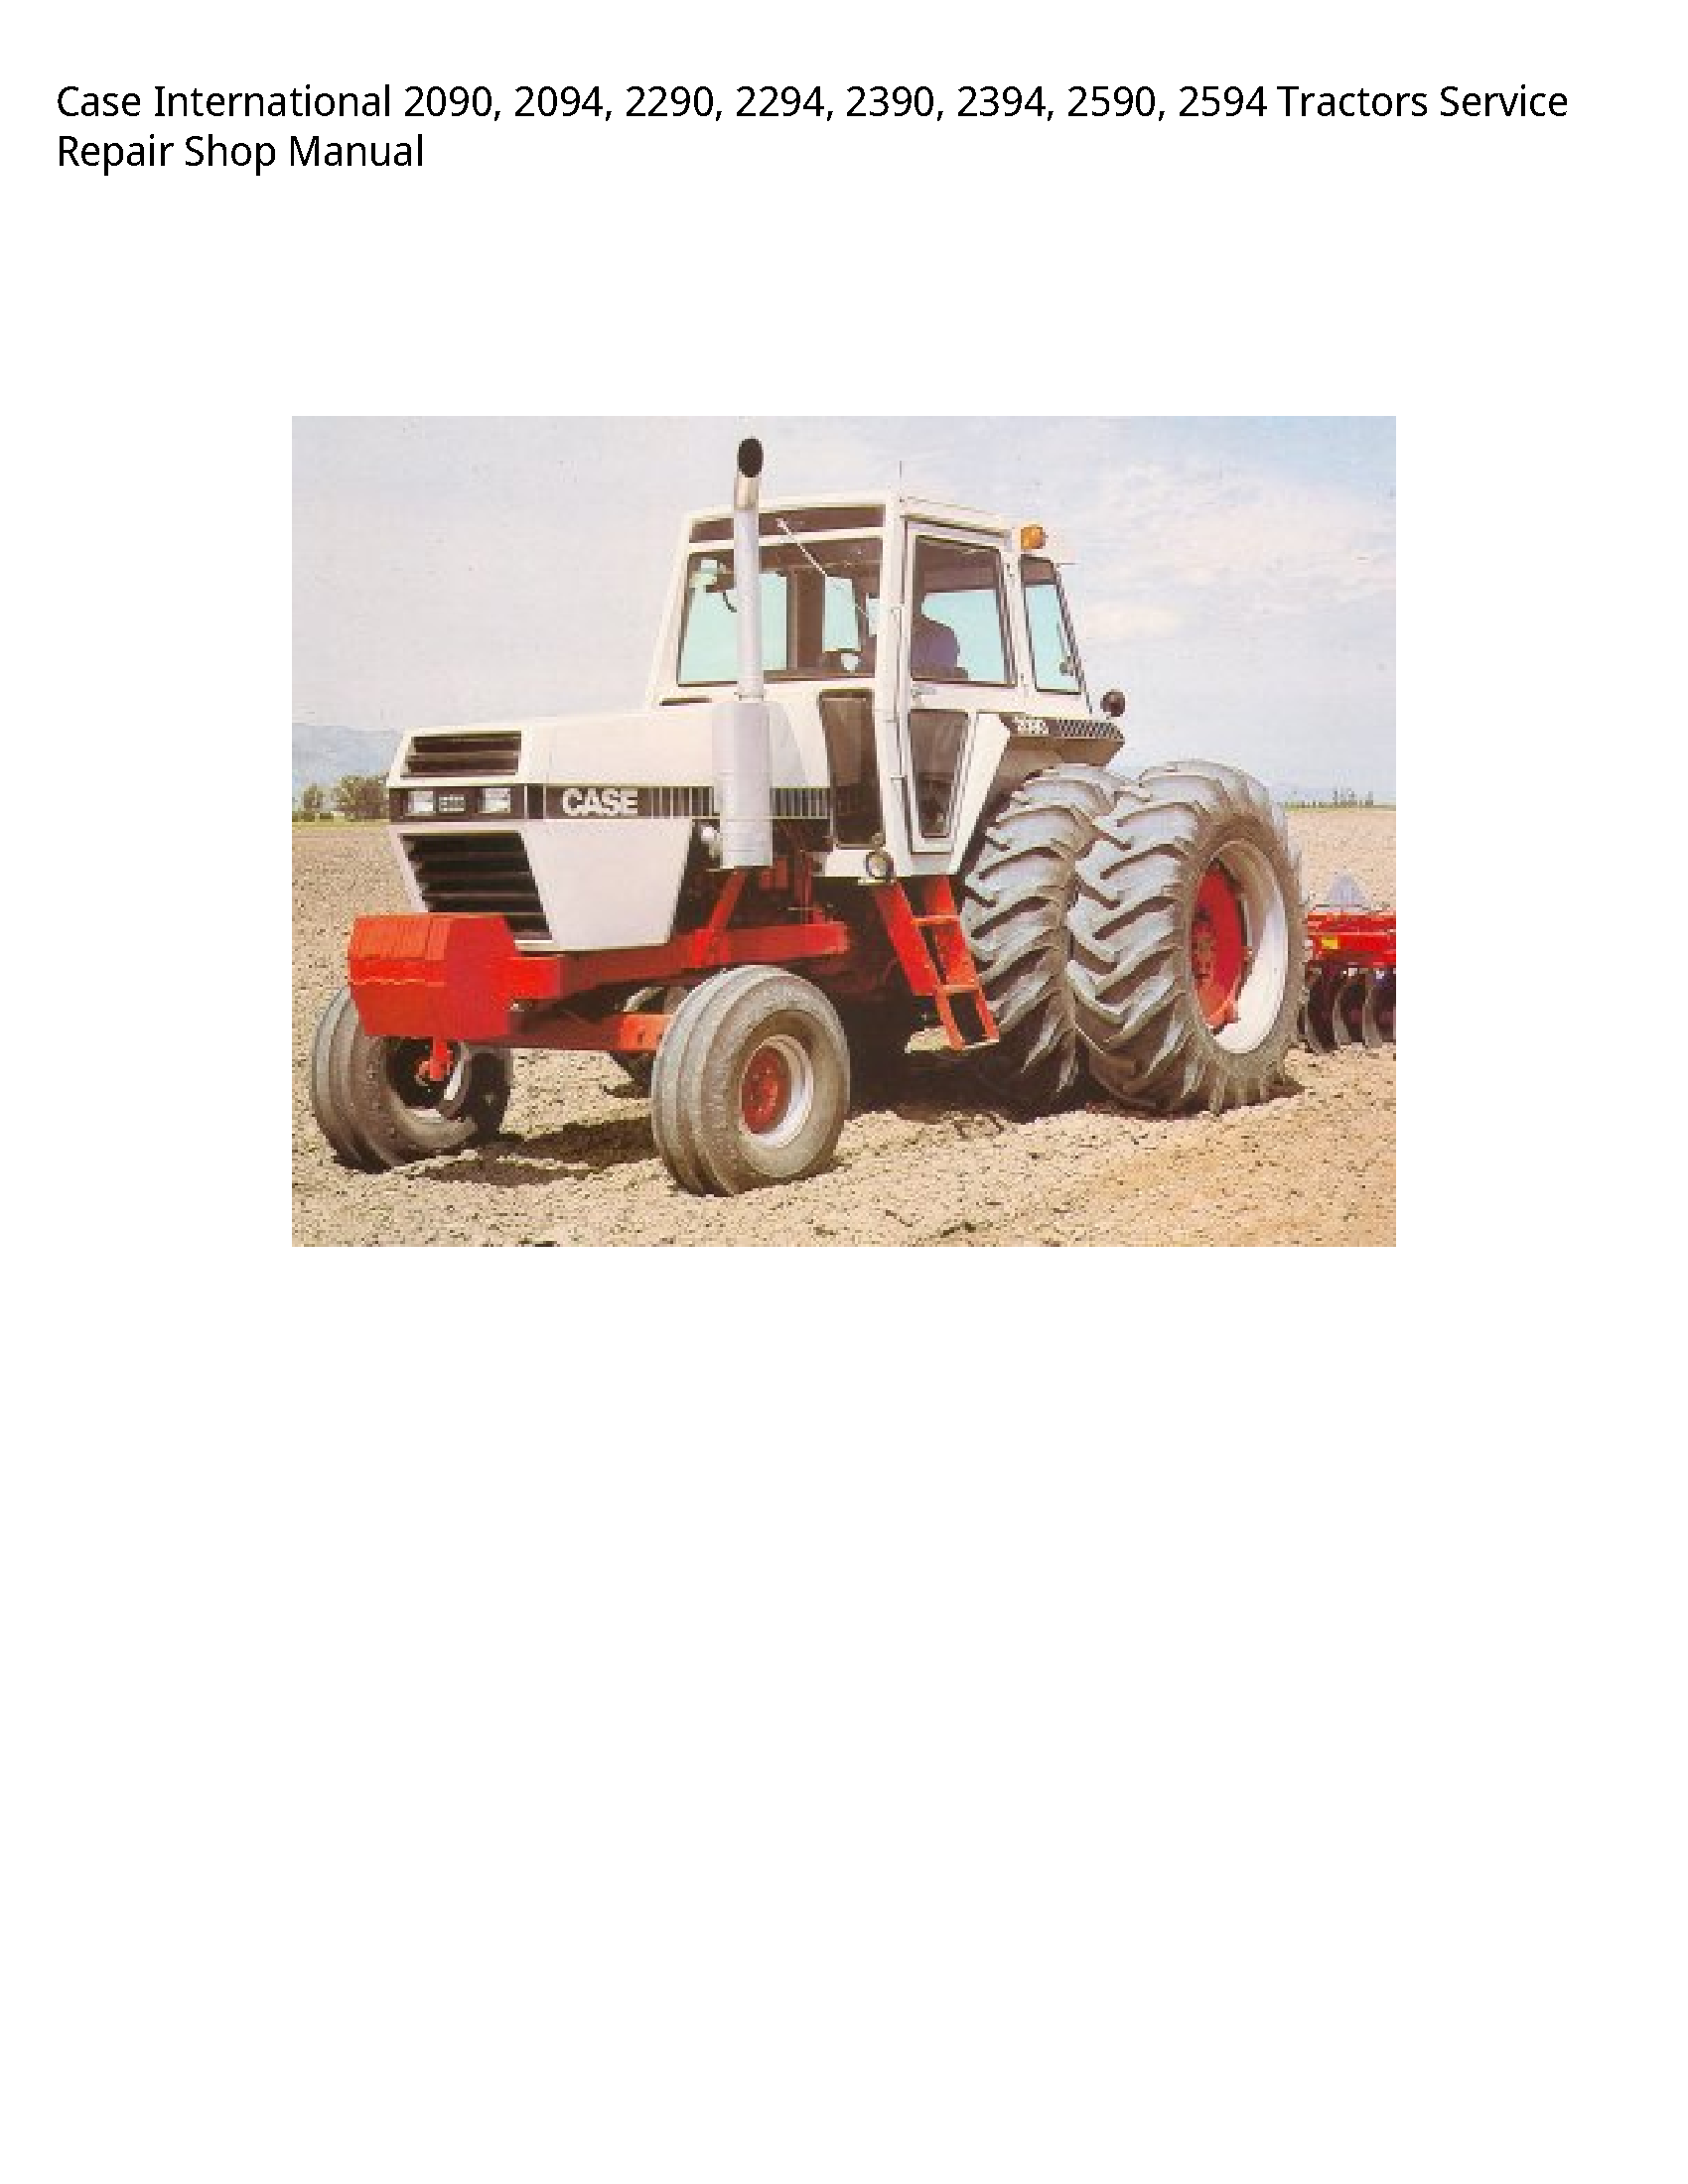 Case/Case IH 2090 International Tractors manual